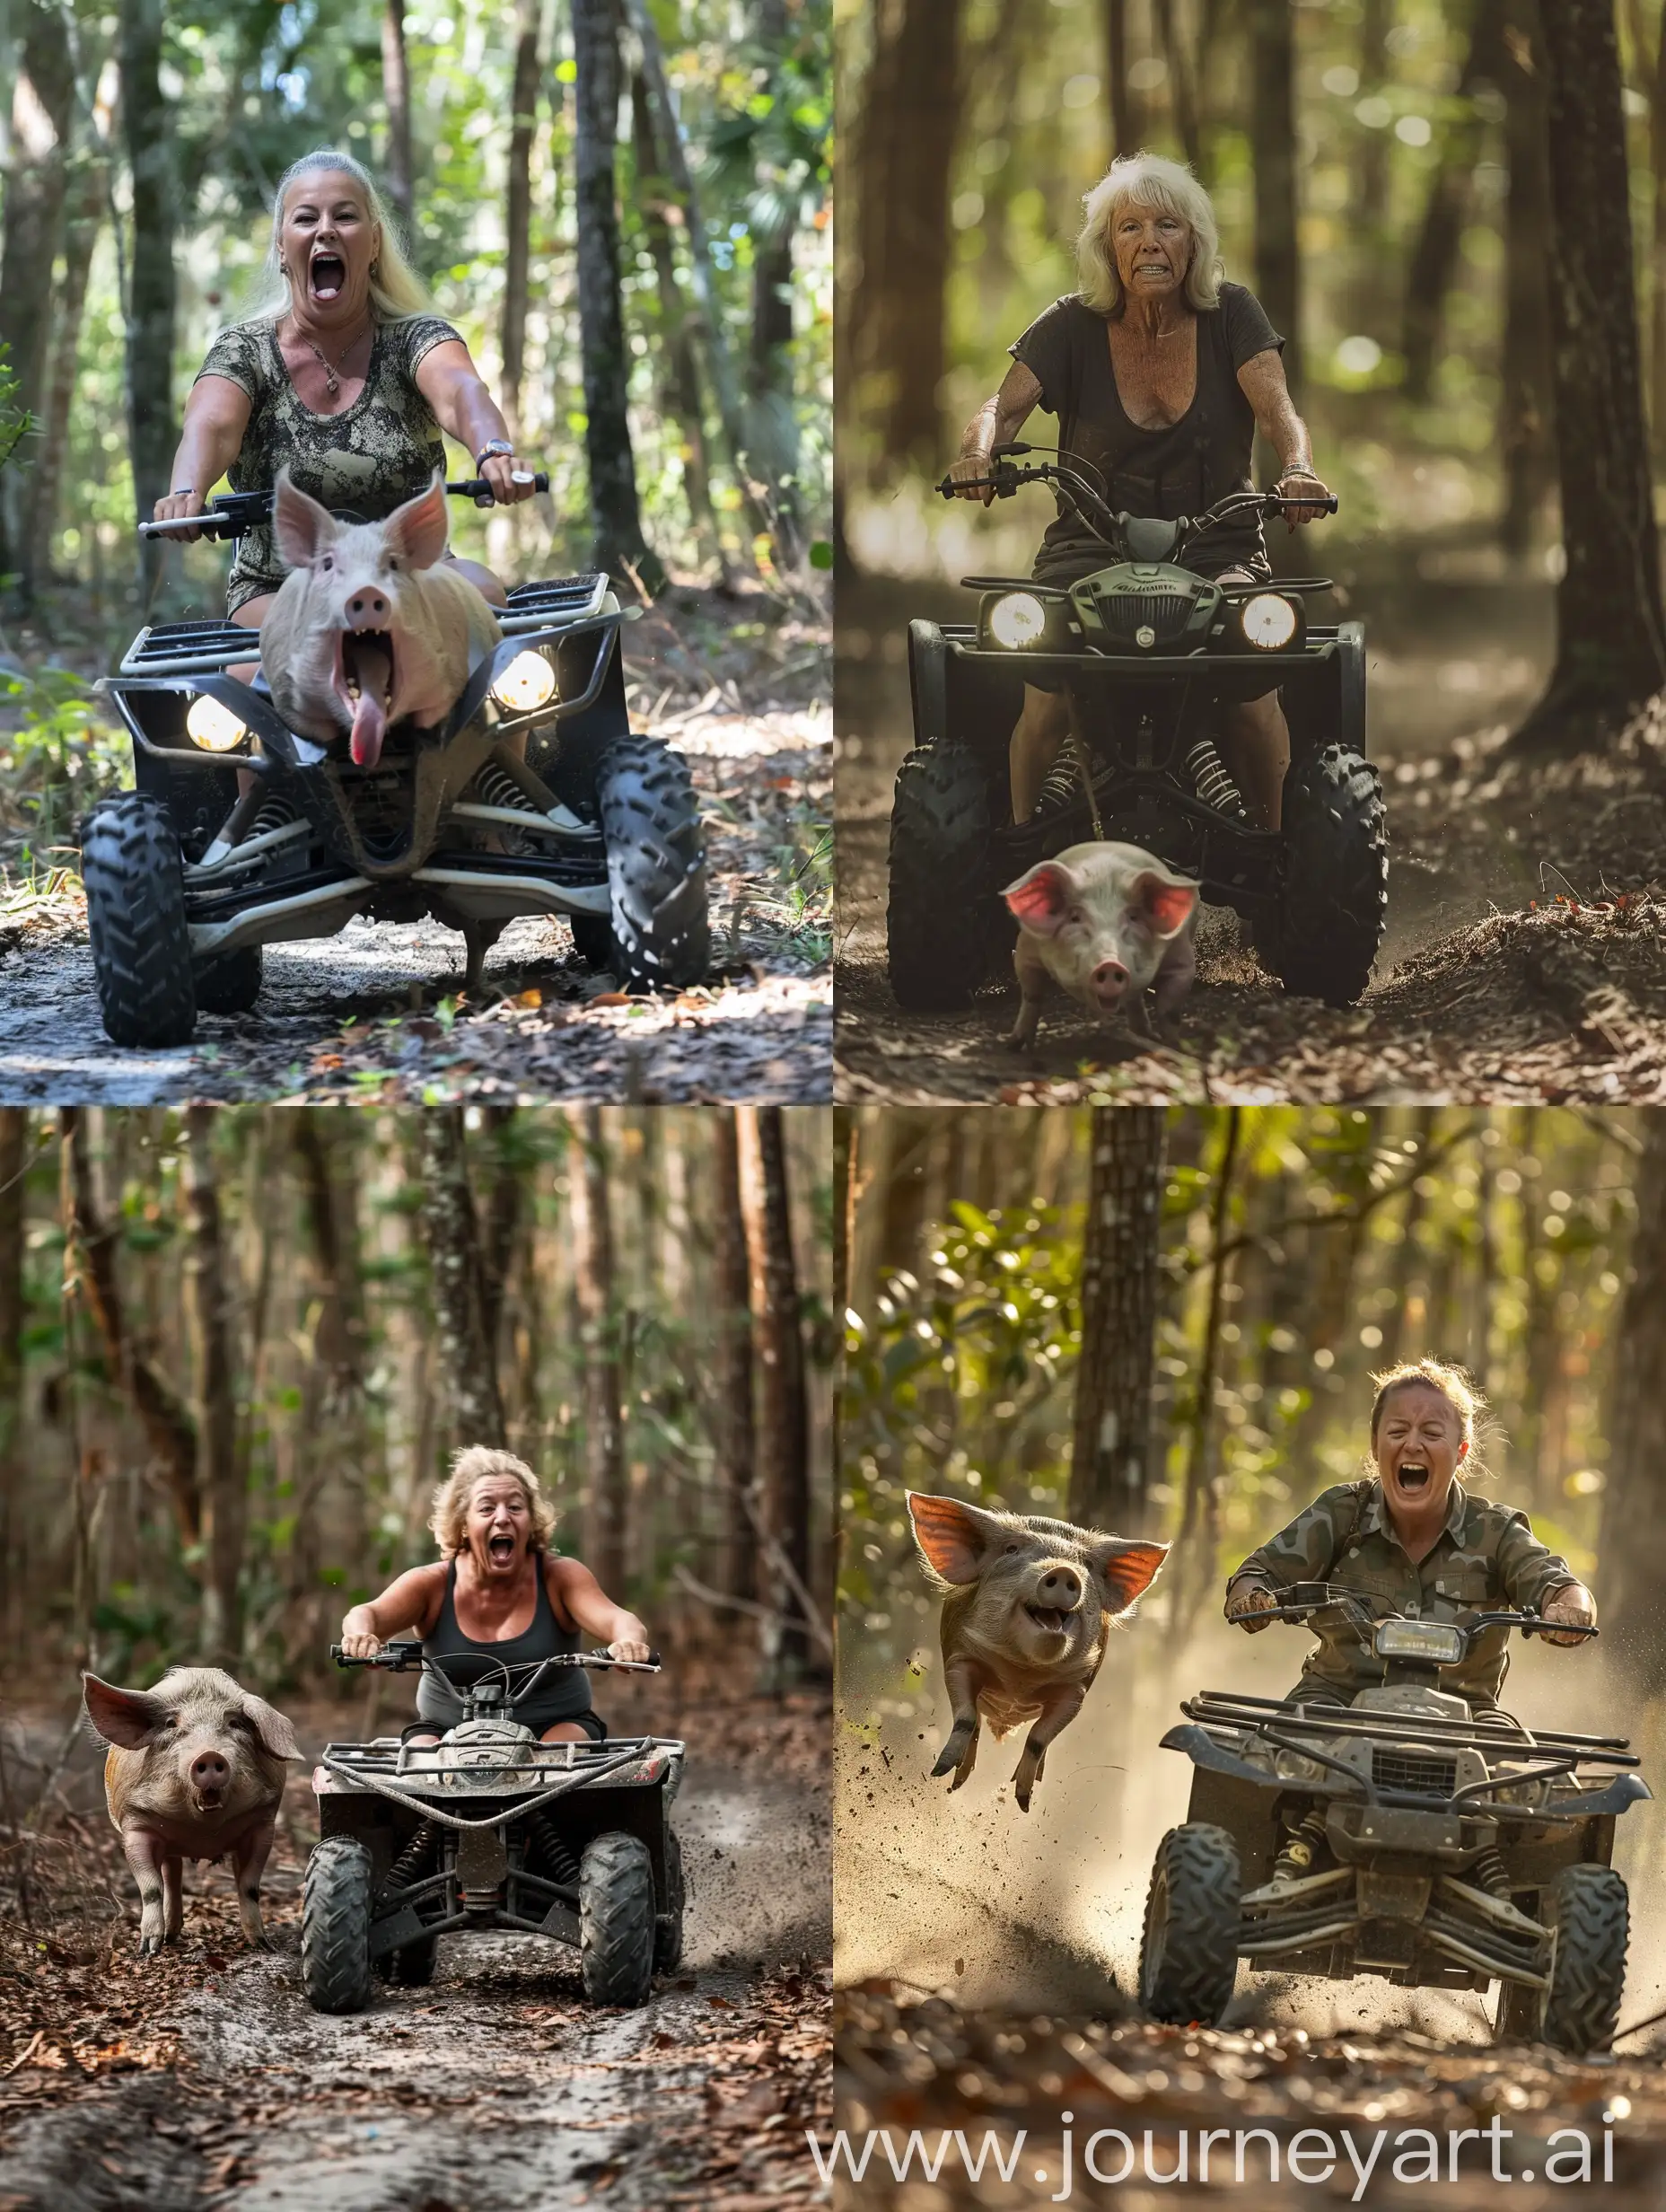 Florida-Woman-Riding-ATV-Chasing-Hog-in-Woods